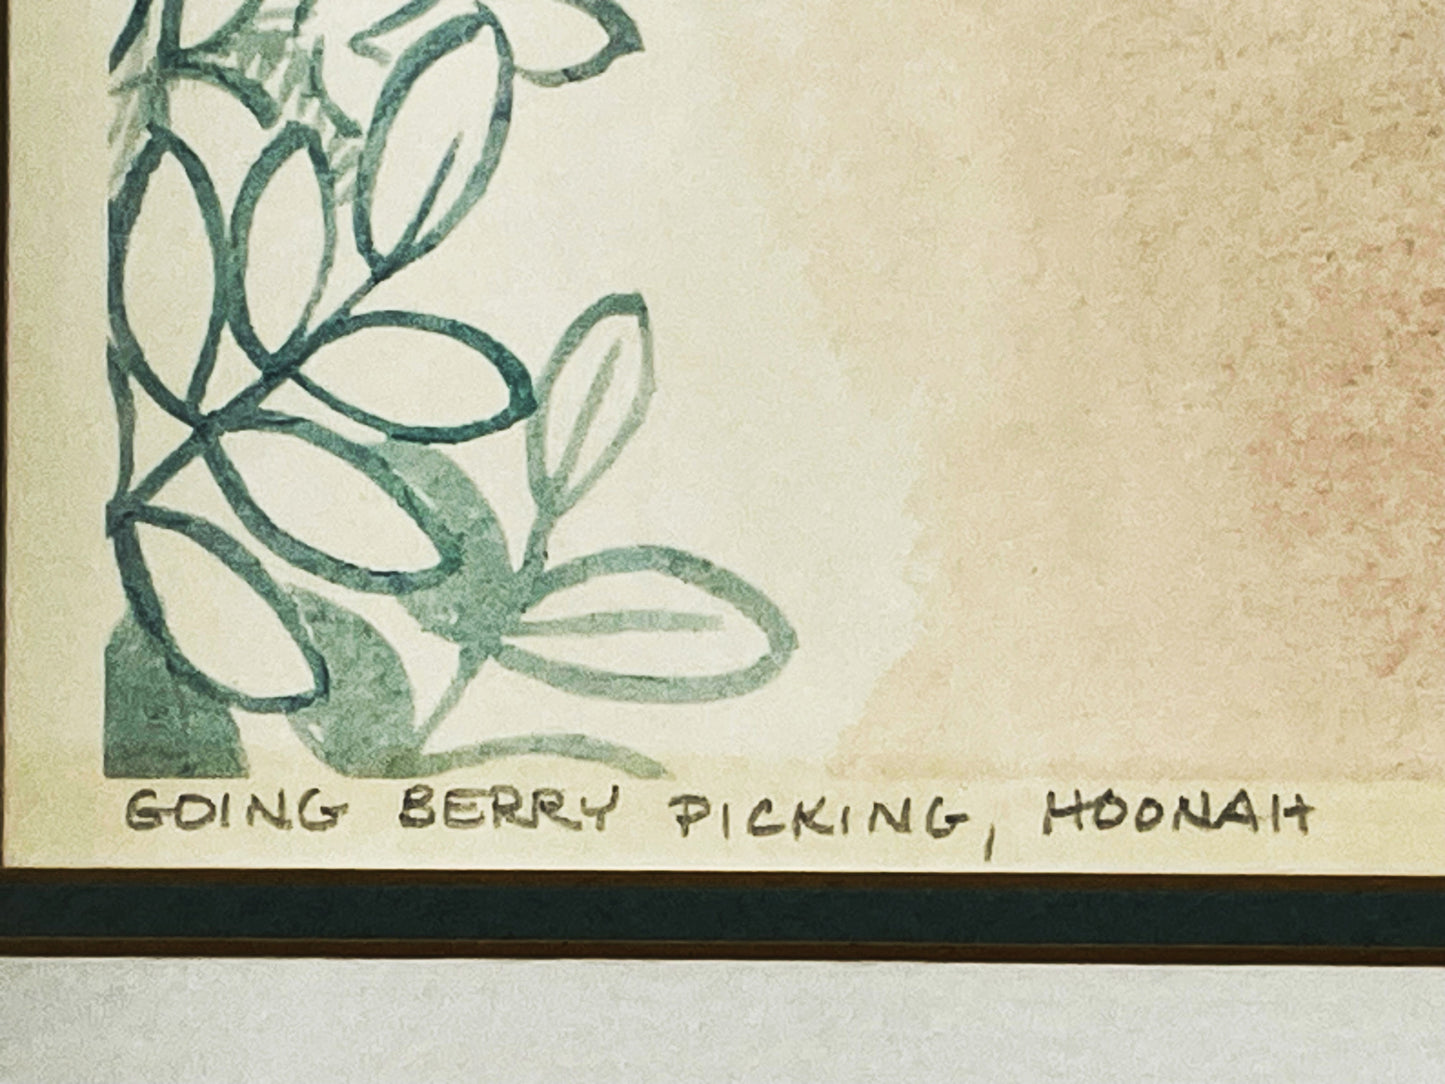 Rie Munoz Alaska Signed Print "Going Berry Picking, Hoohah"